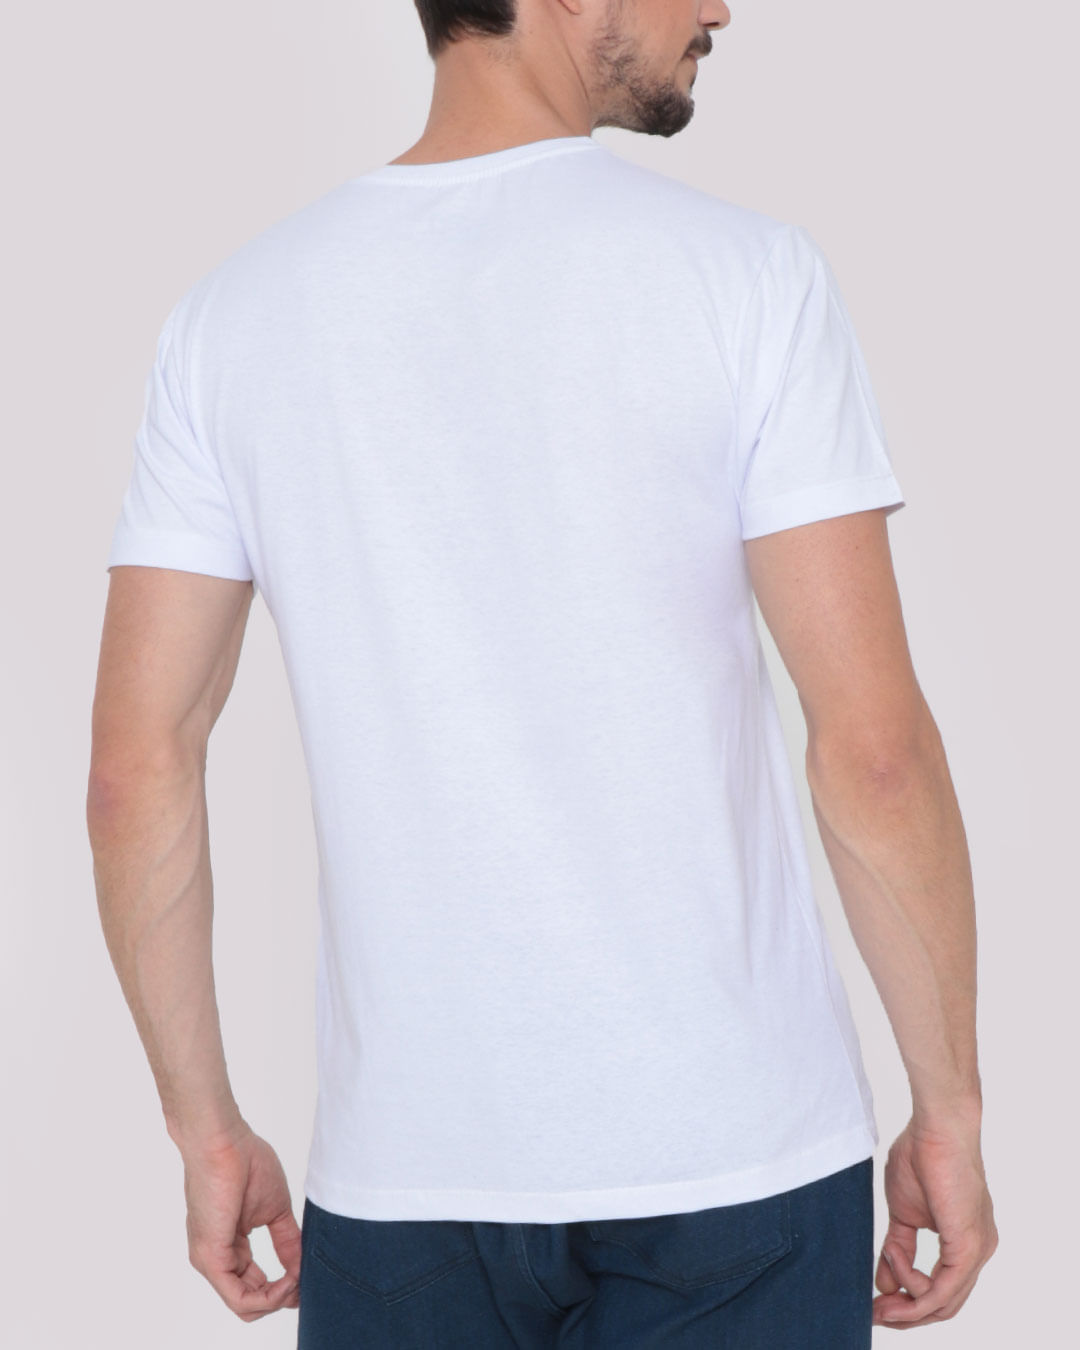 Camiseta-Masculina-Estampa-Resilience-Branca